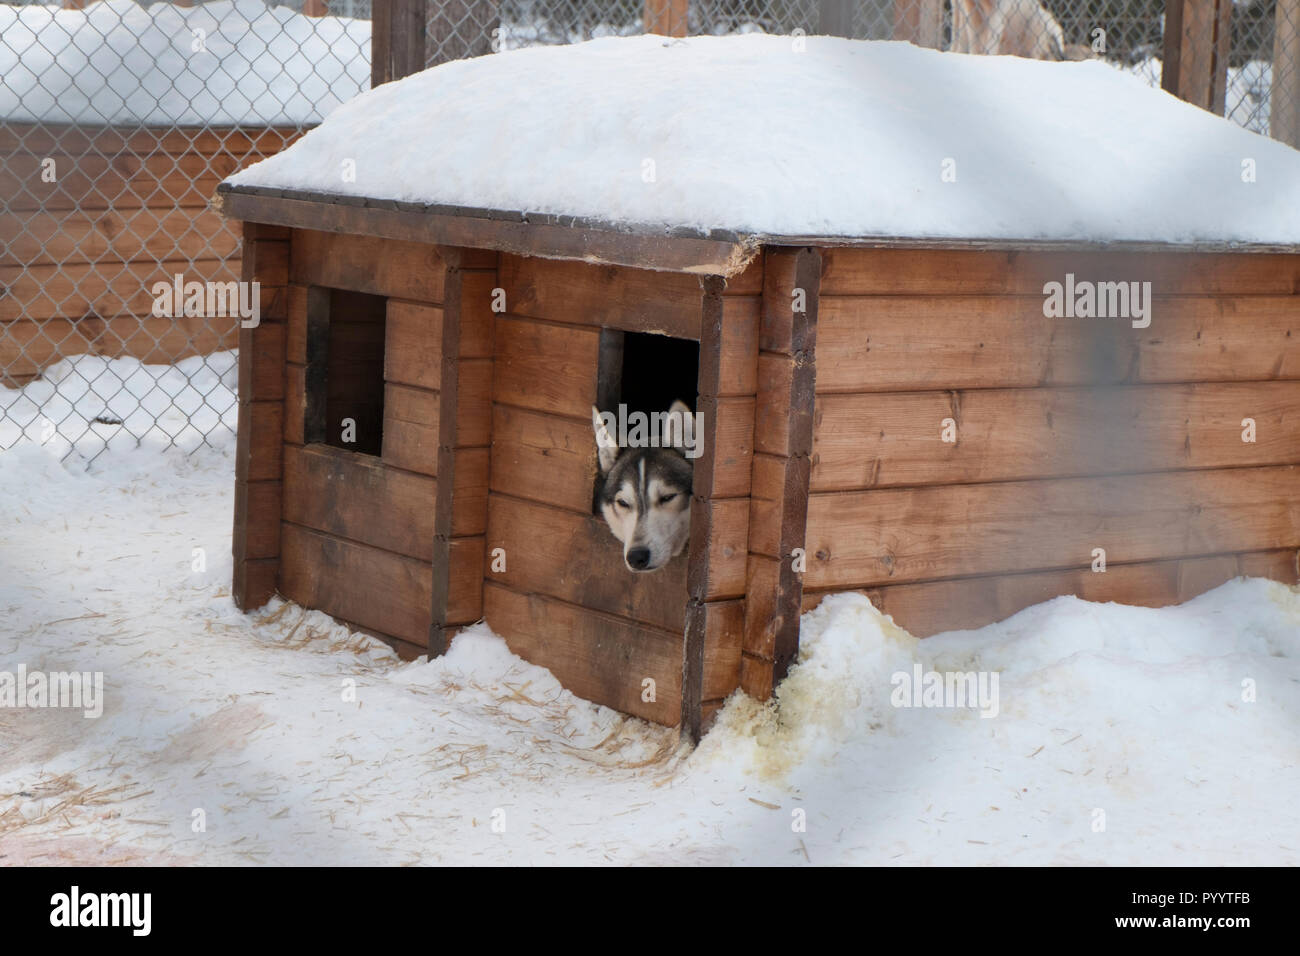 A siberian husky dog napping in a dog house while waiting for dog sledding near Kiruna, Sweden in winter. Stock Photo